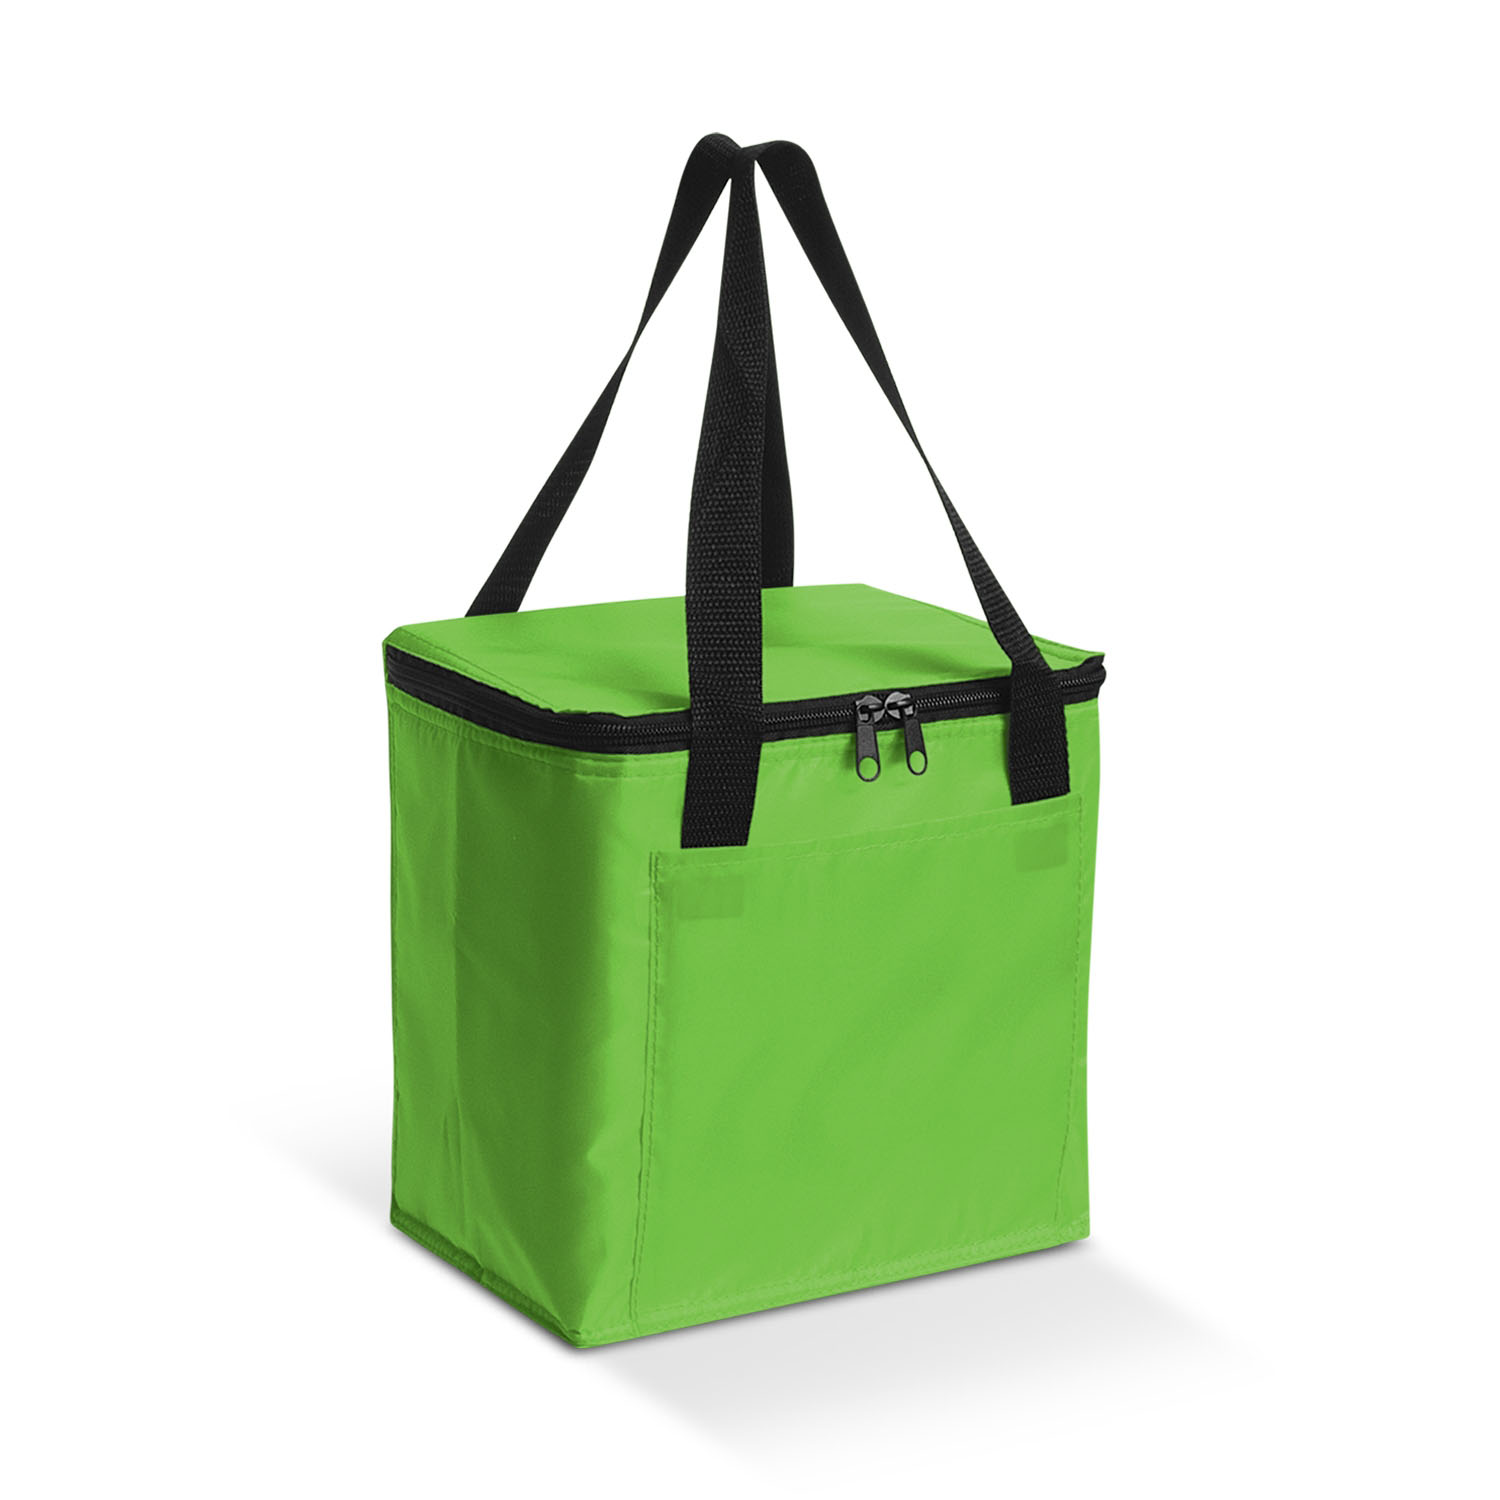 Get Green Siberia Cooler Bags Online in Perth